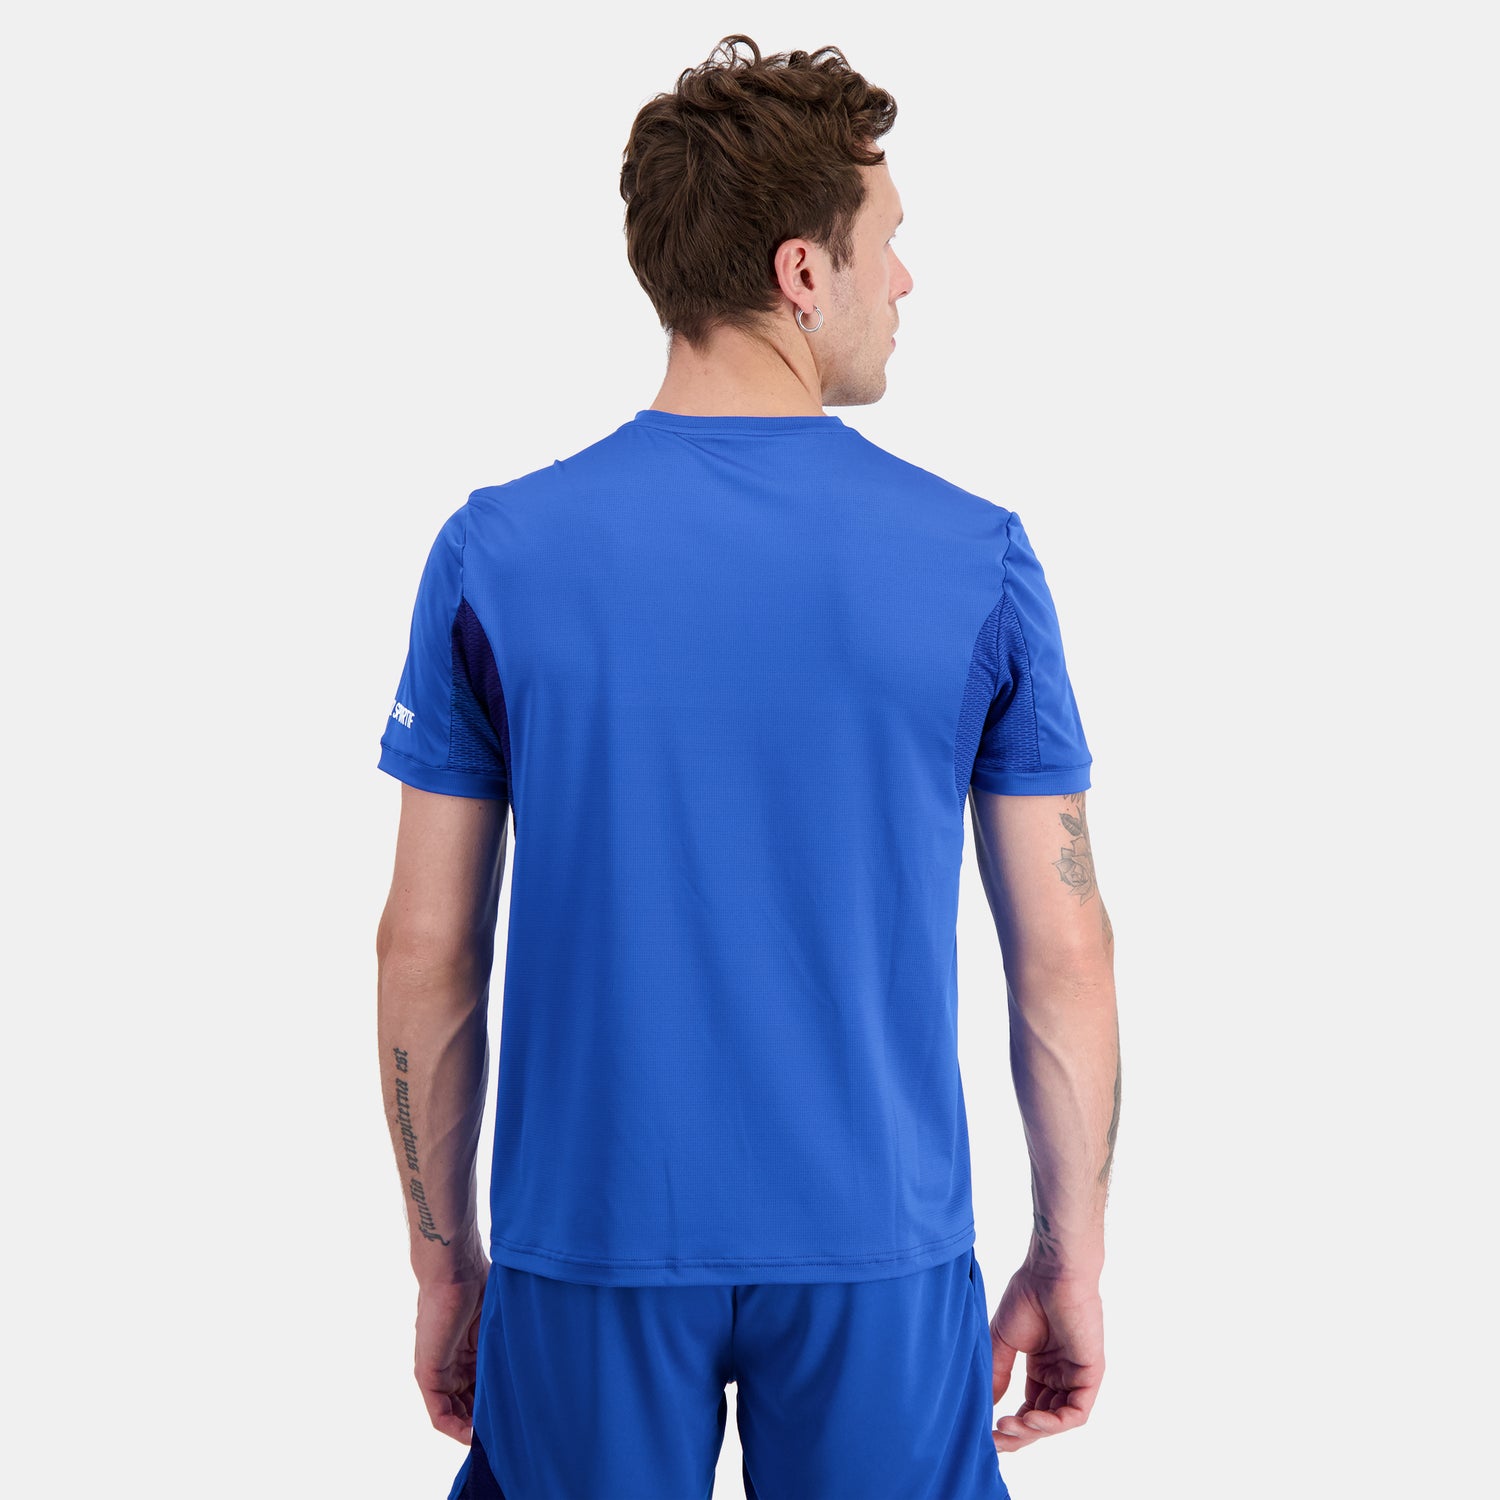 2410518-TENNIS PRO Tee SS 24 N°1 M lapis blue  | Camiseta Hombre